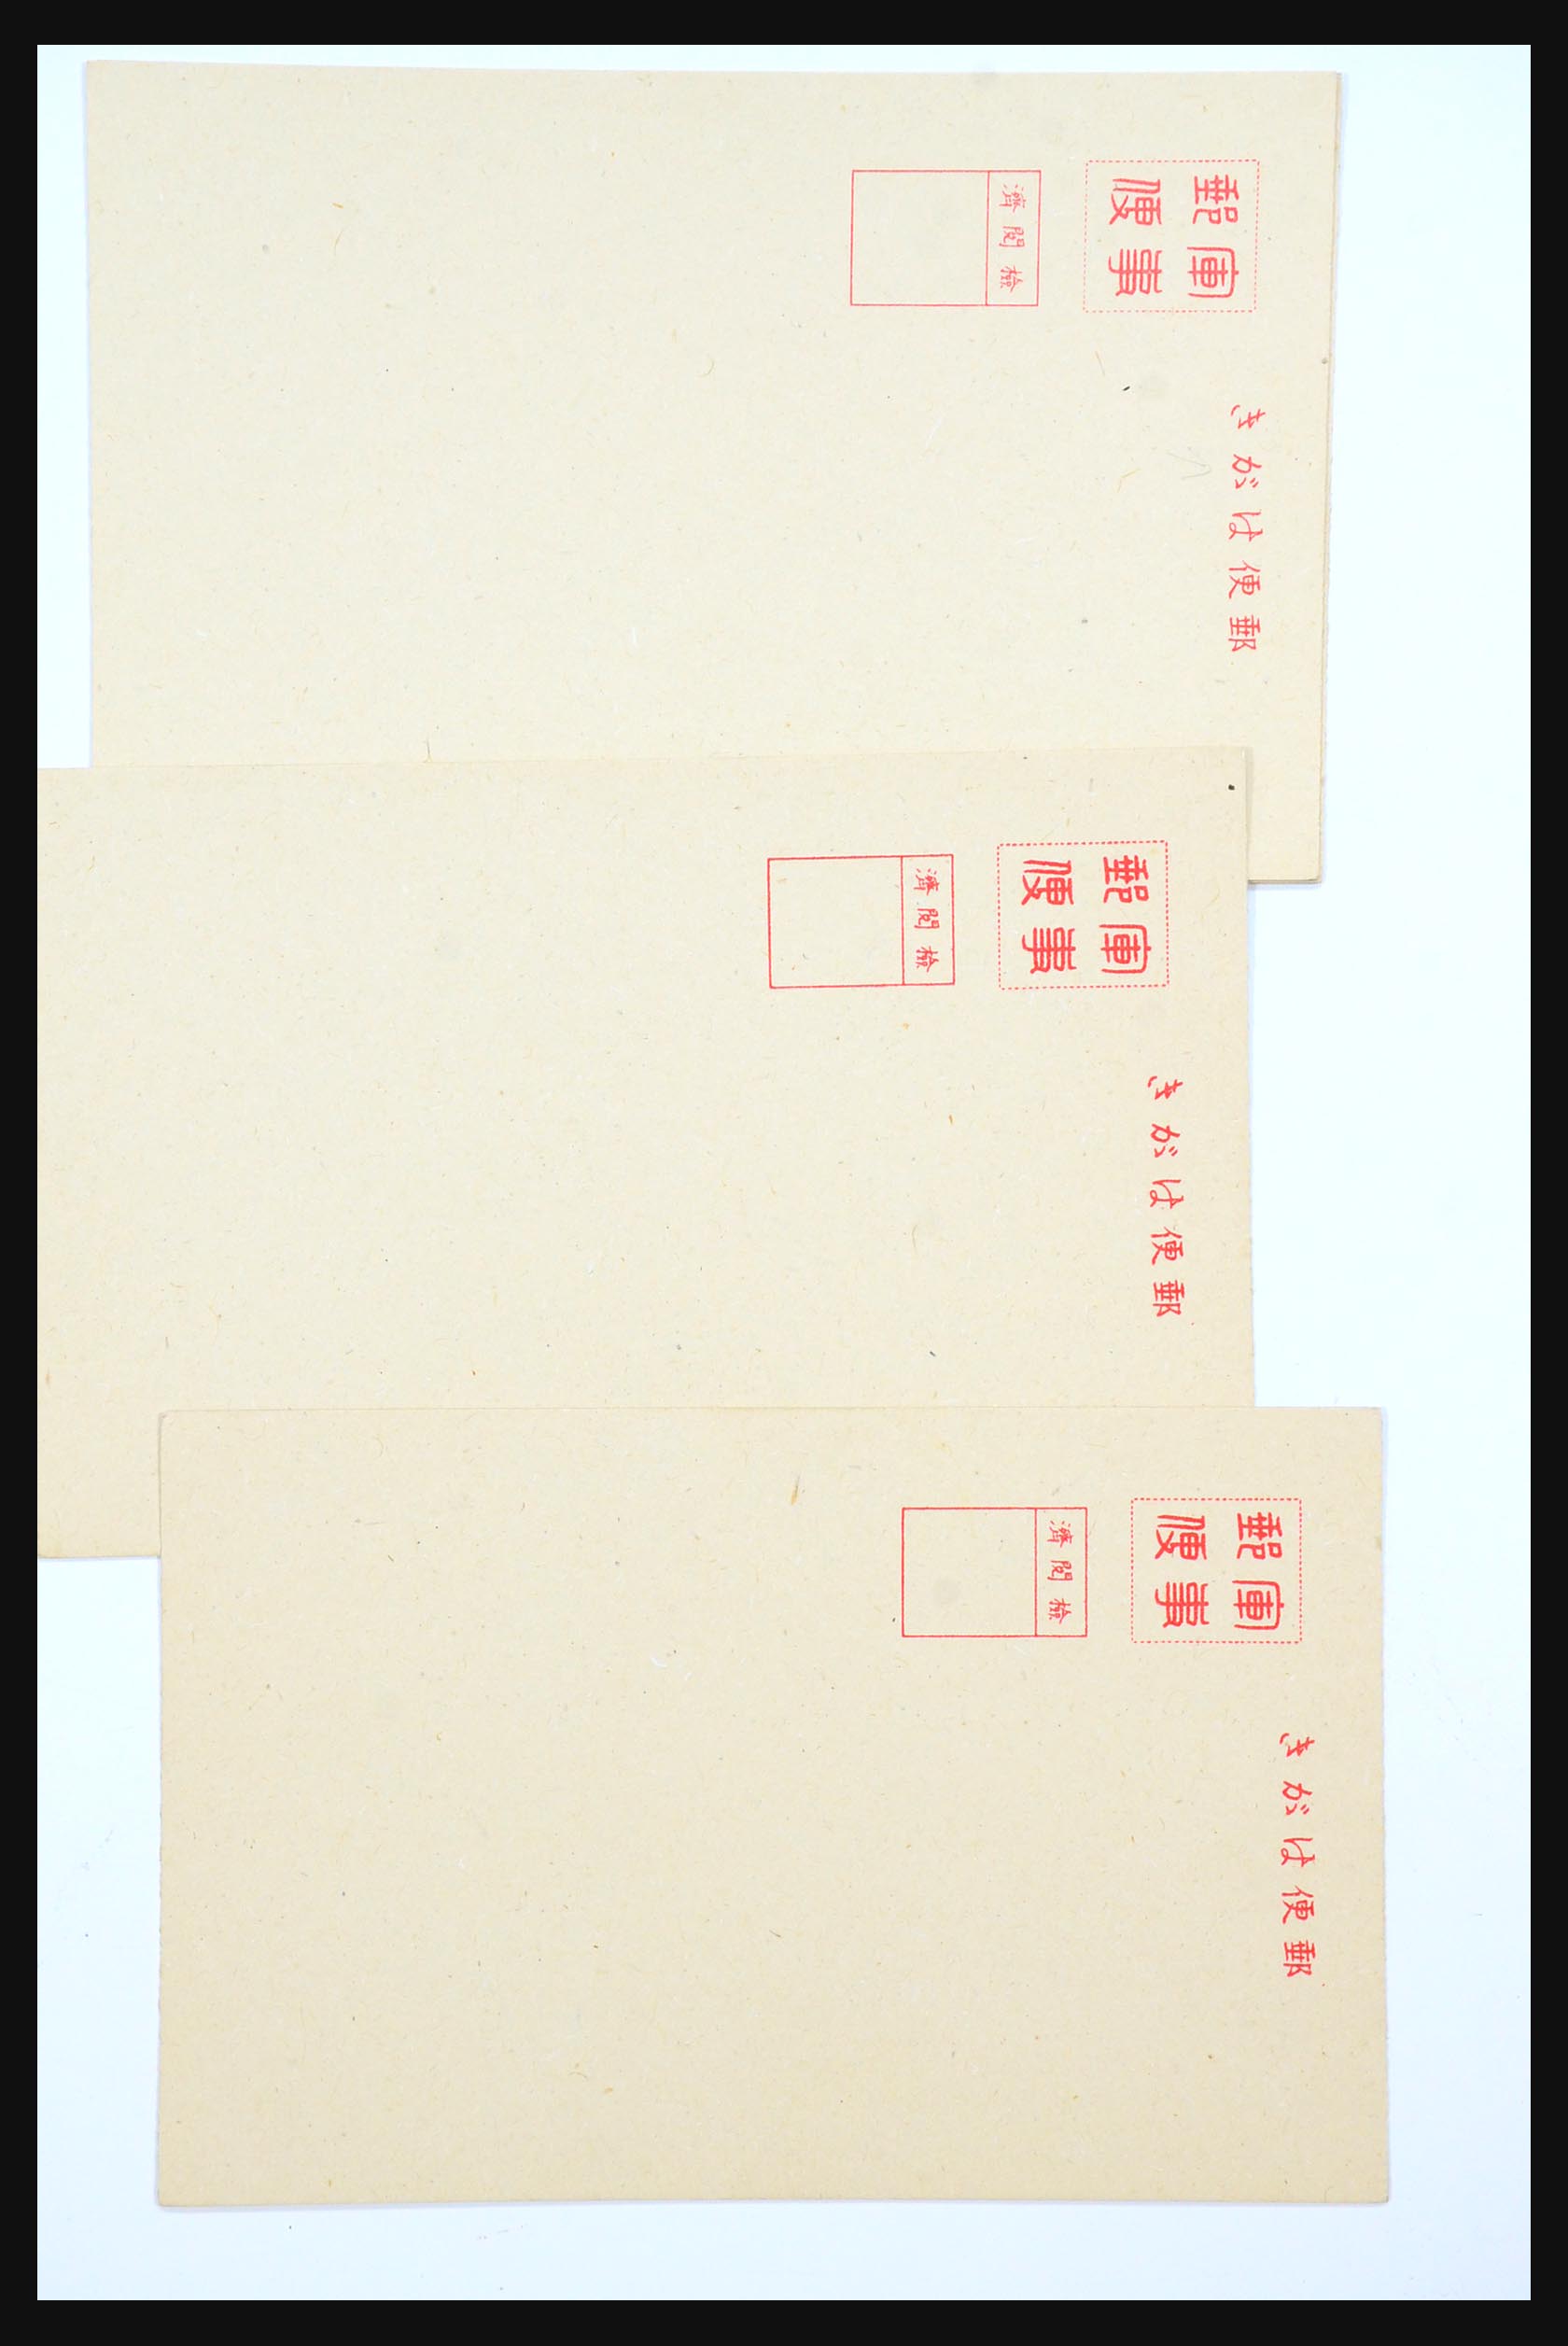 31362 056 - 31362 Nederlands Indië Japanse bezetting brieven 1942-1945.